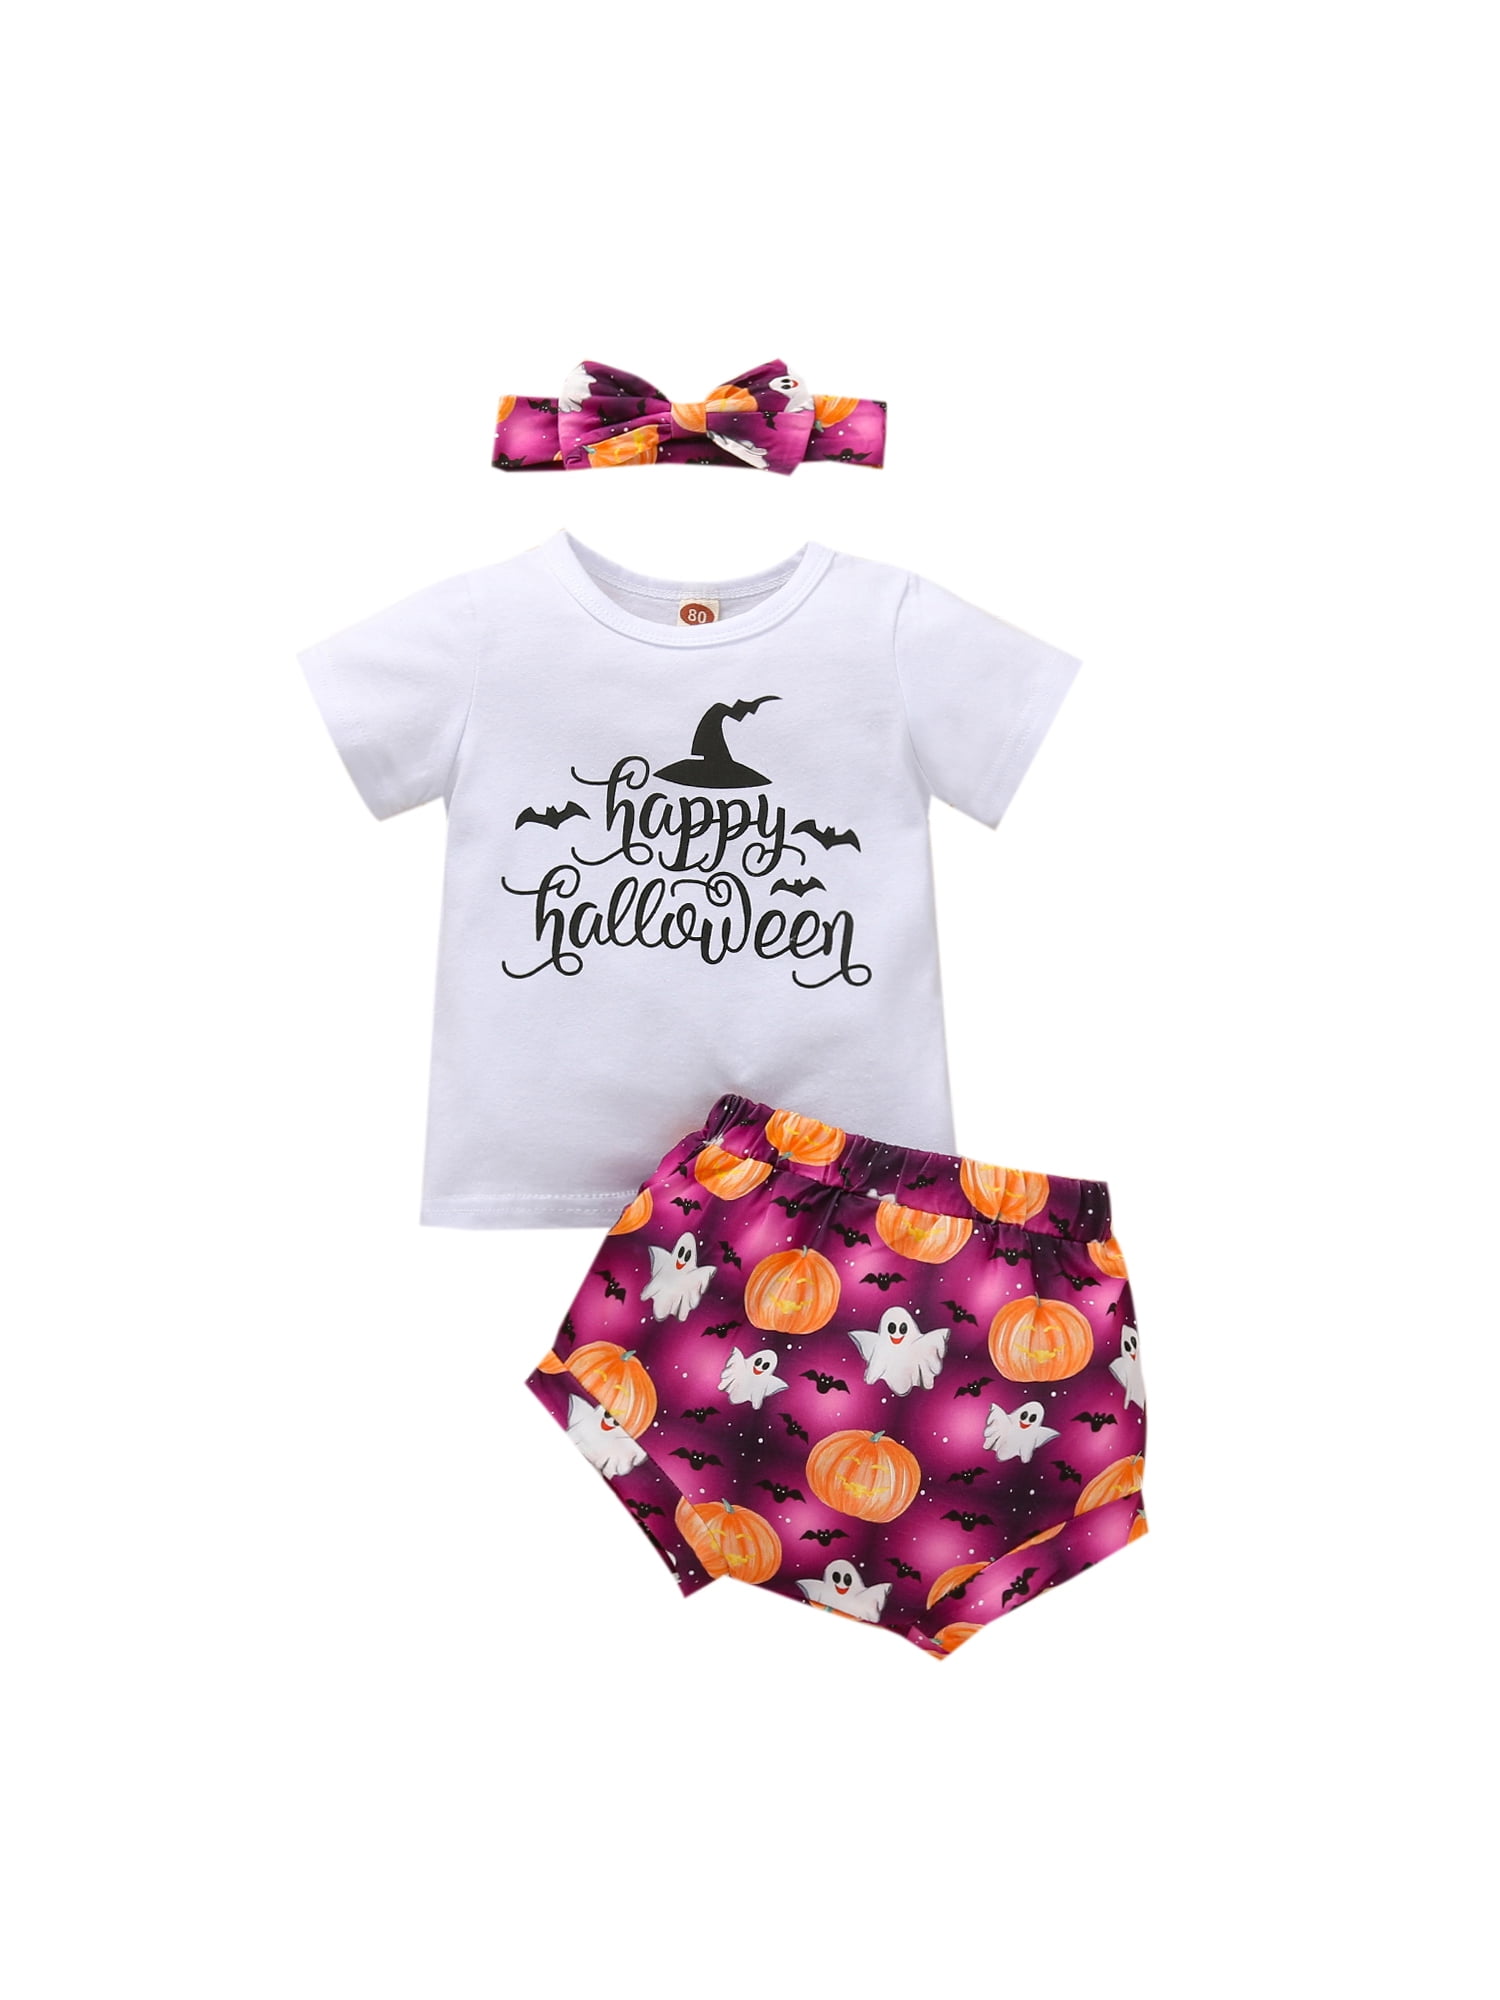 SHIRT1-KIDS Sloth Toddler/Infant Girls Short Sleeve T-Shirts Ruffles Shirt Tee Jersey for 2-6T 